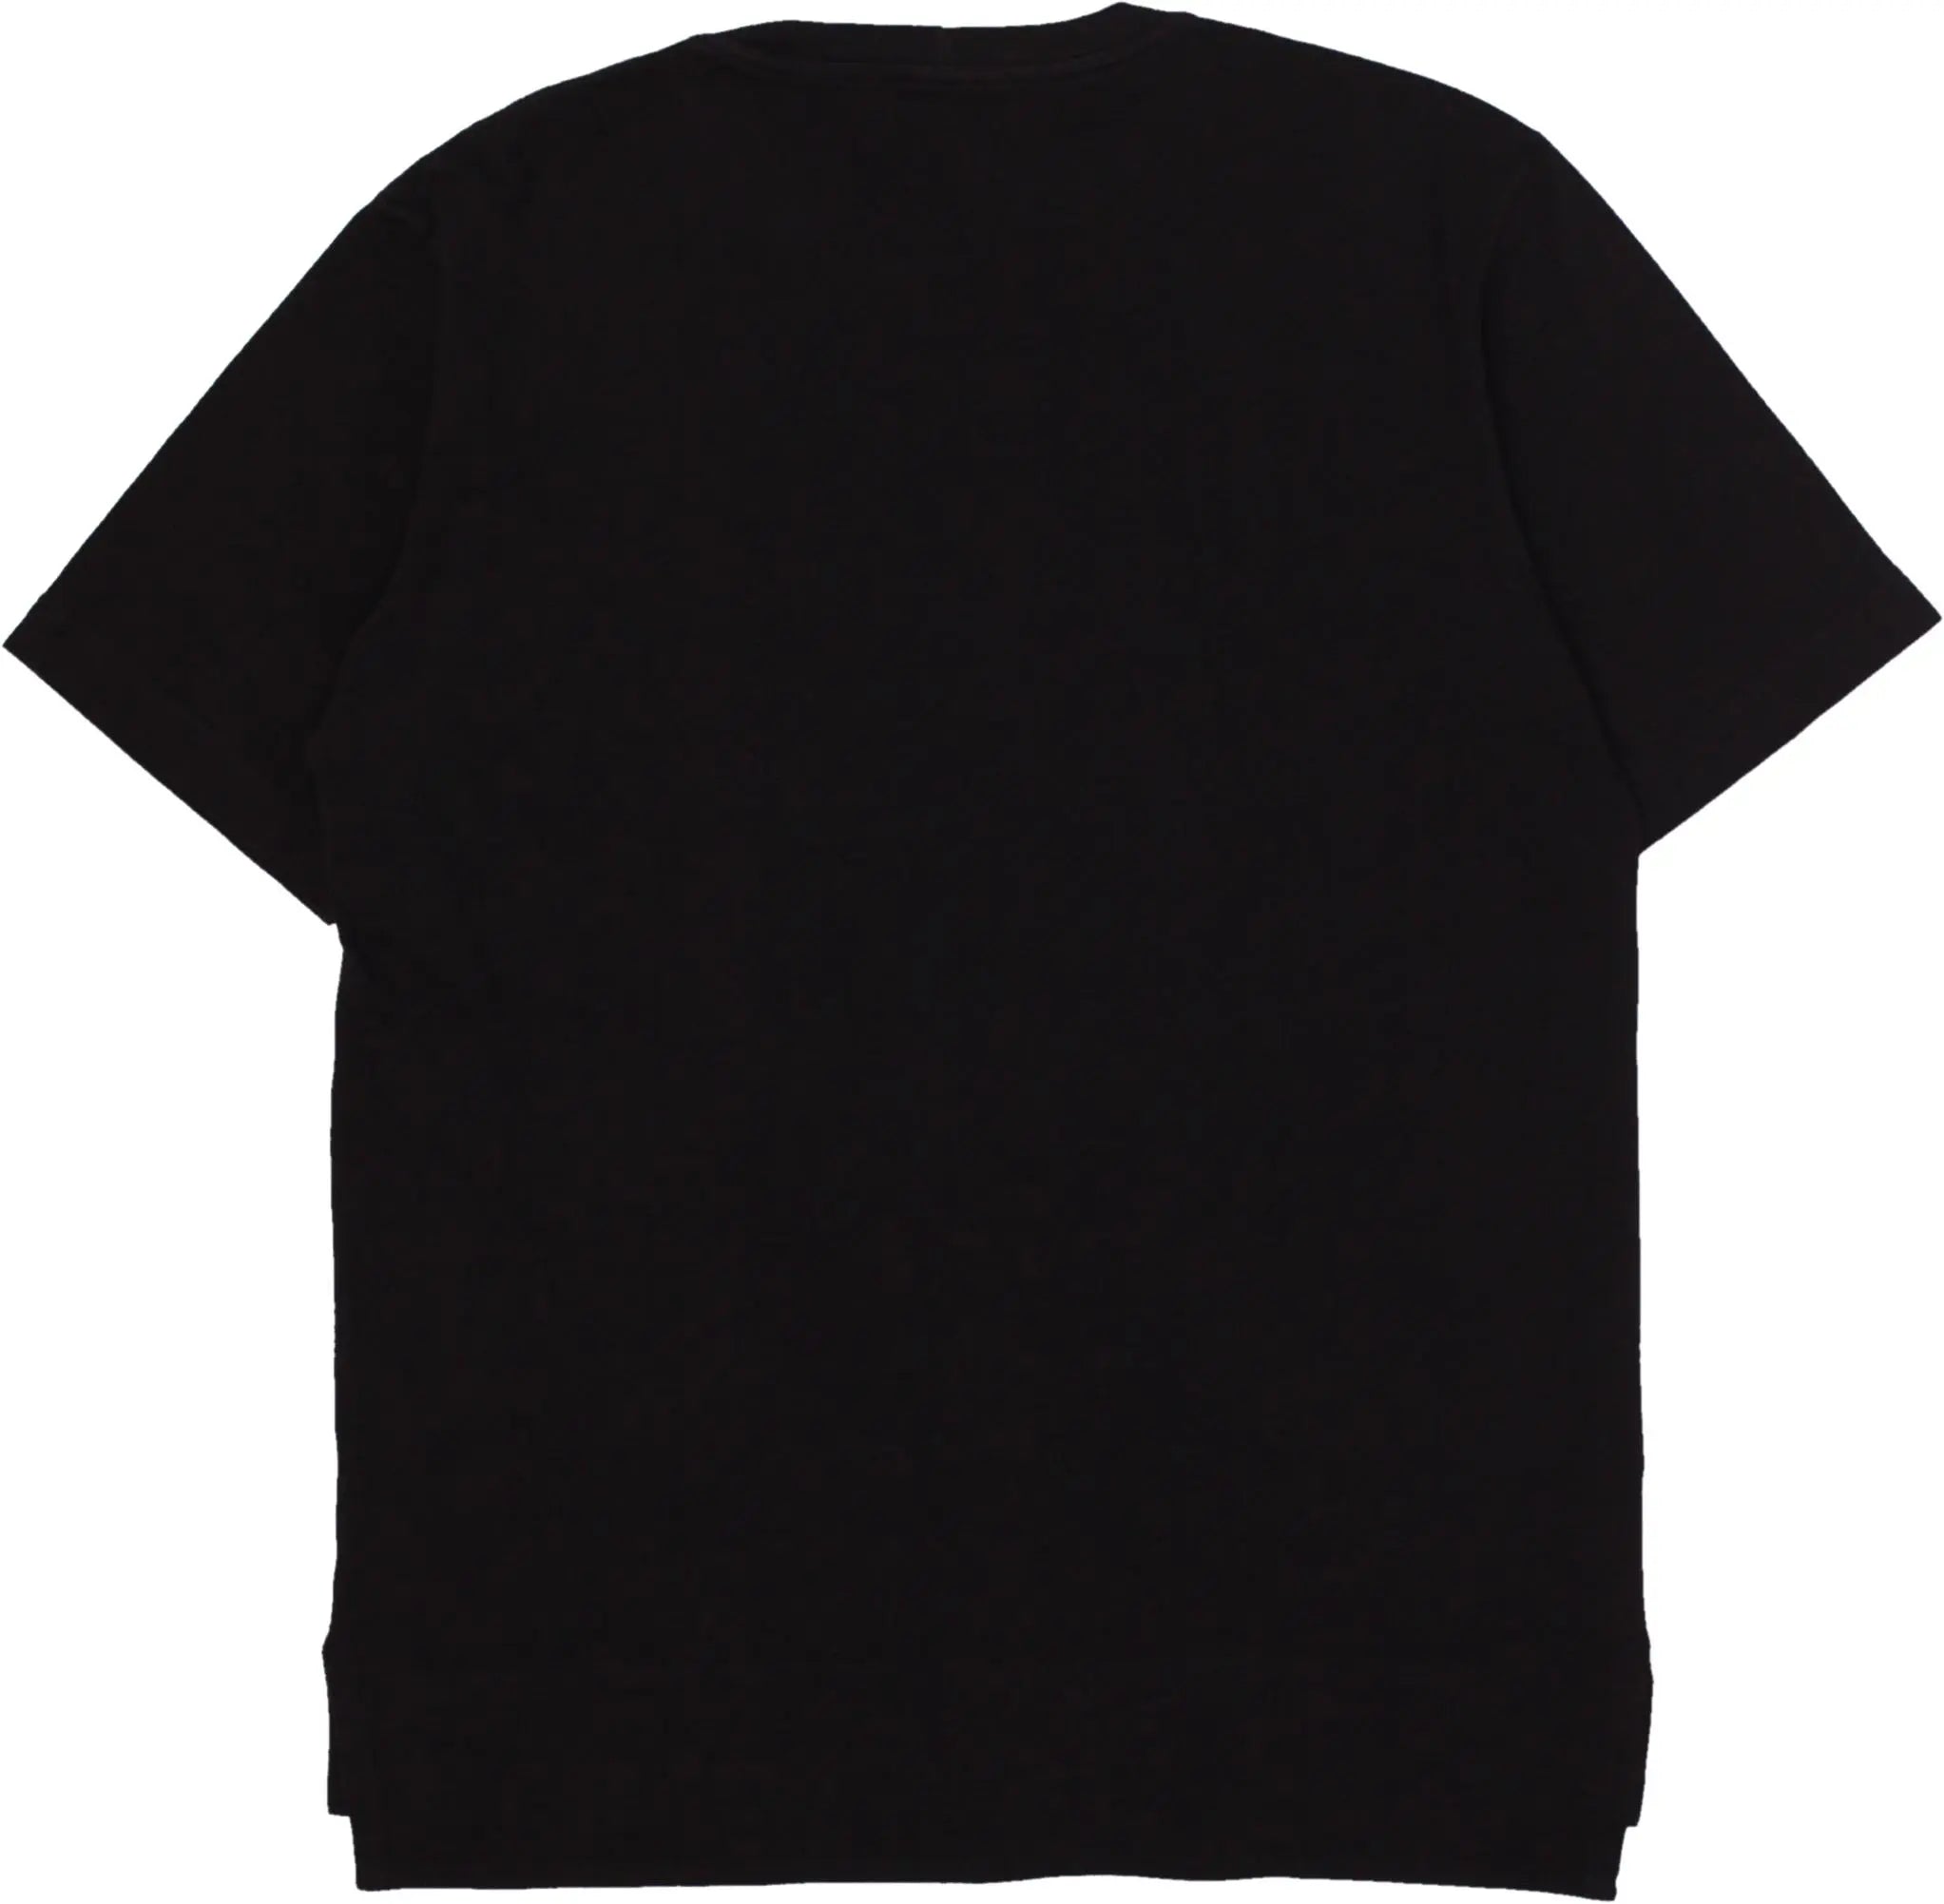 Leonard - Leonard Paris Homme Black T-shirt- ThriftTale.com - Vintage and second handclothing